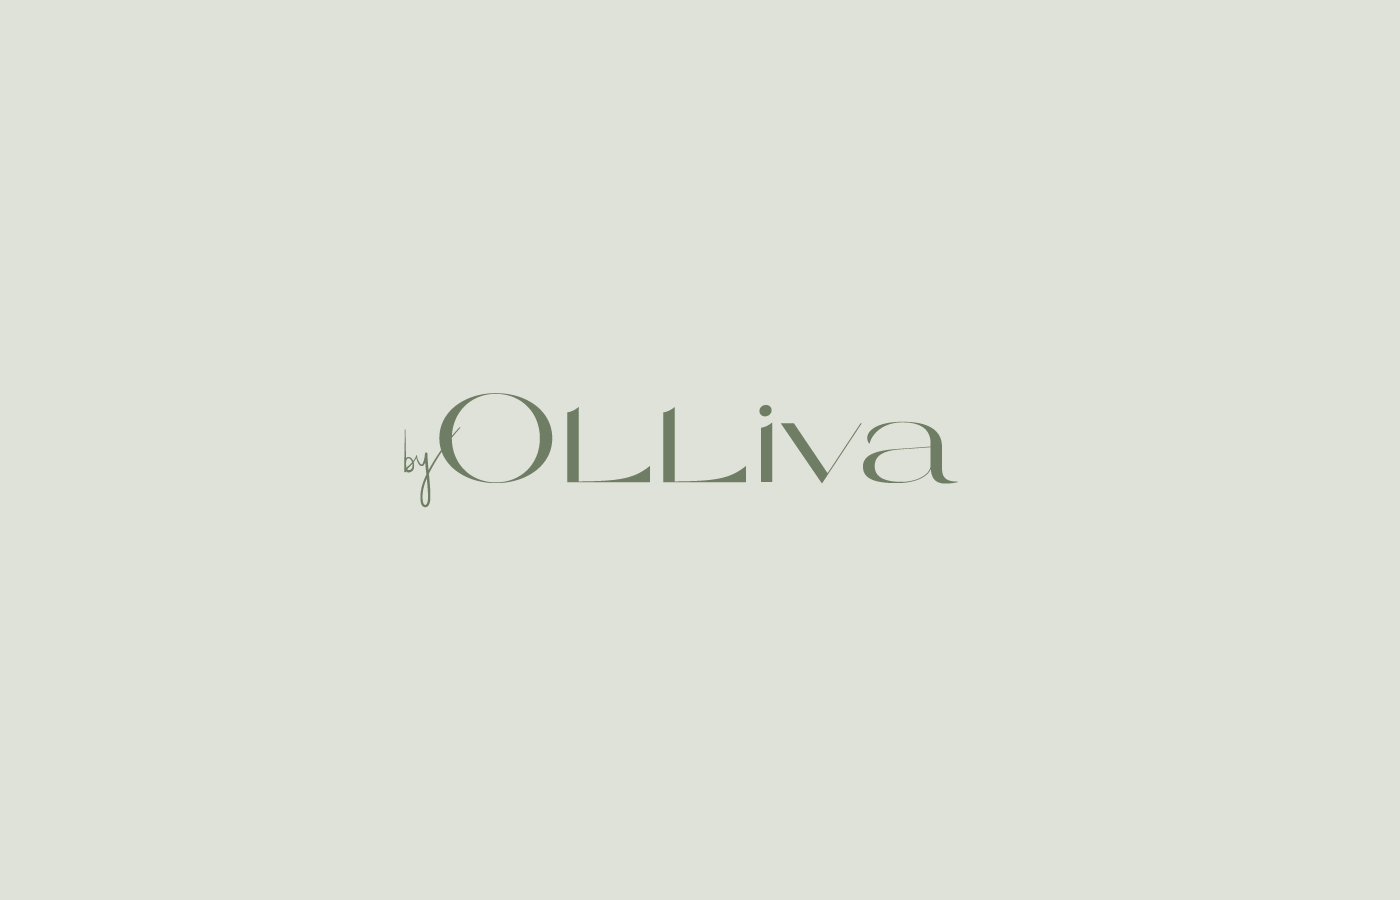 olivia byollivia green Ollive jewelry jewels branding  identity